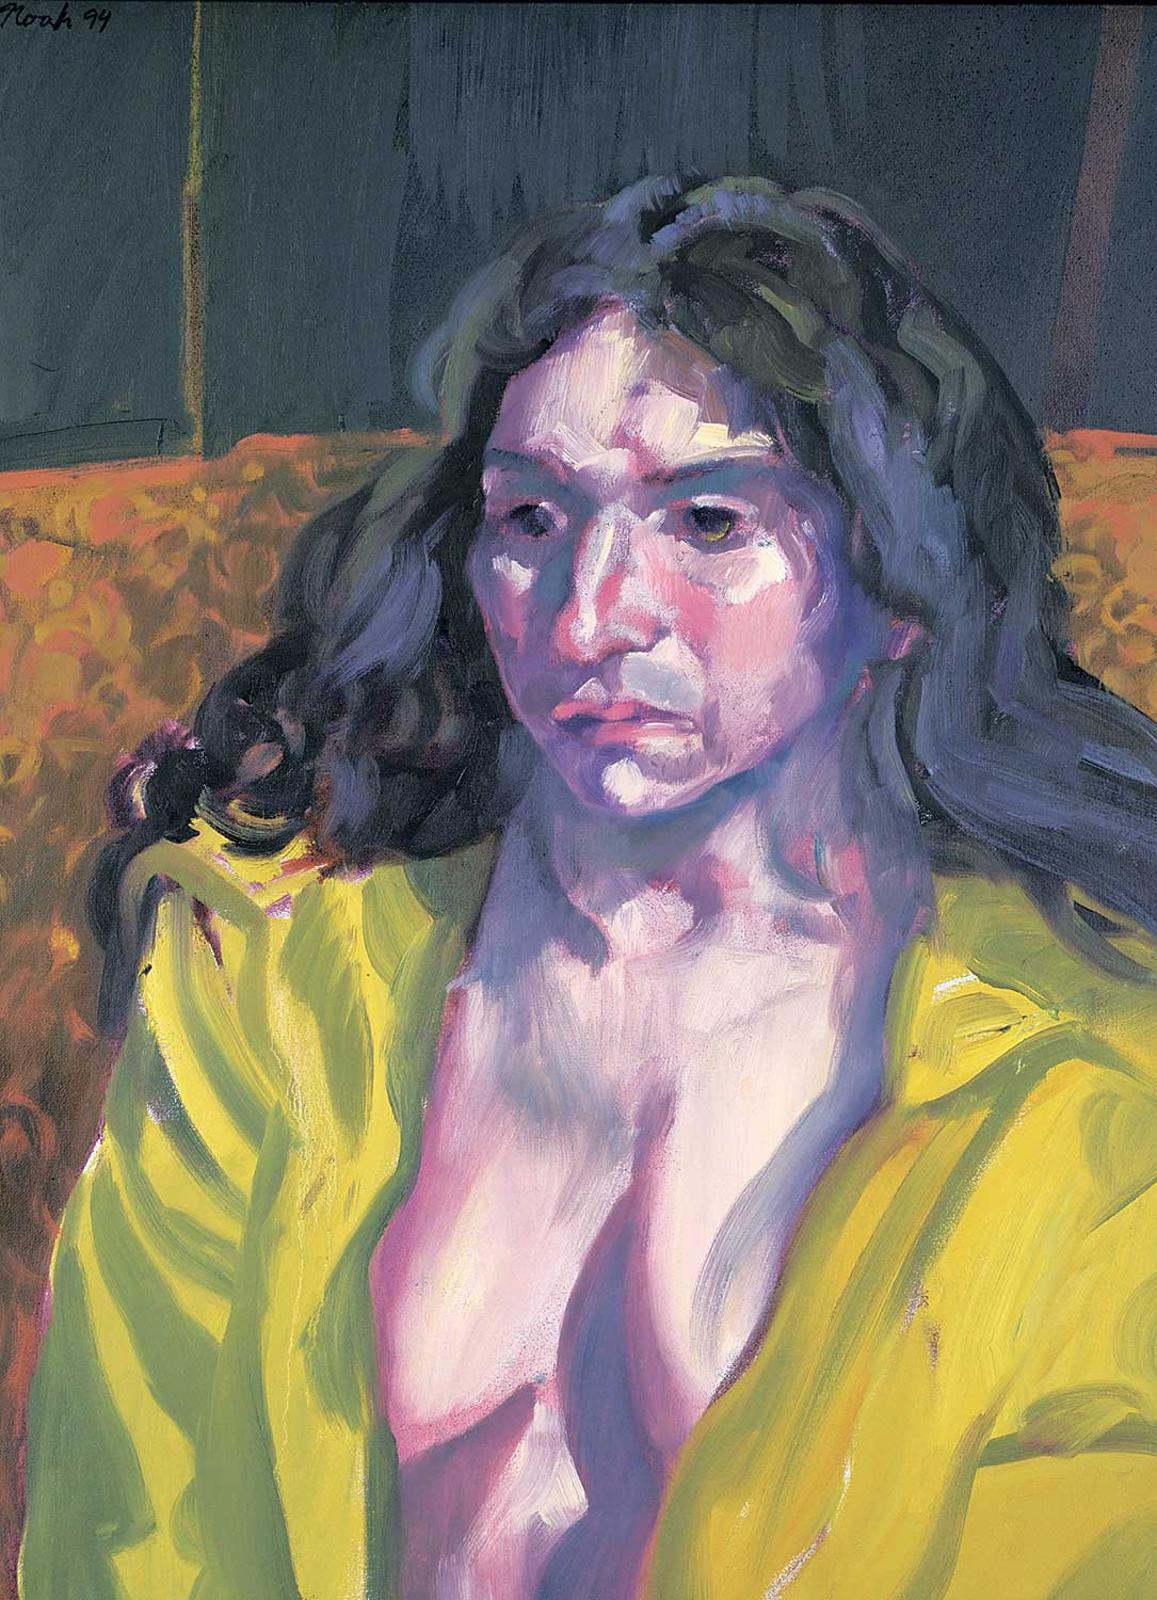 Noah Becker (1970) - Untitled - Woman in Yellow